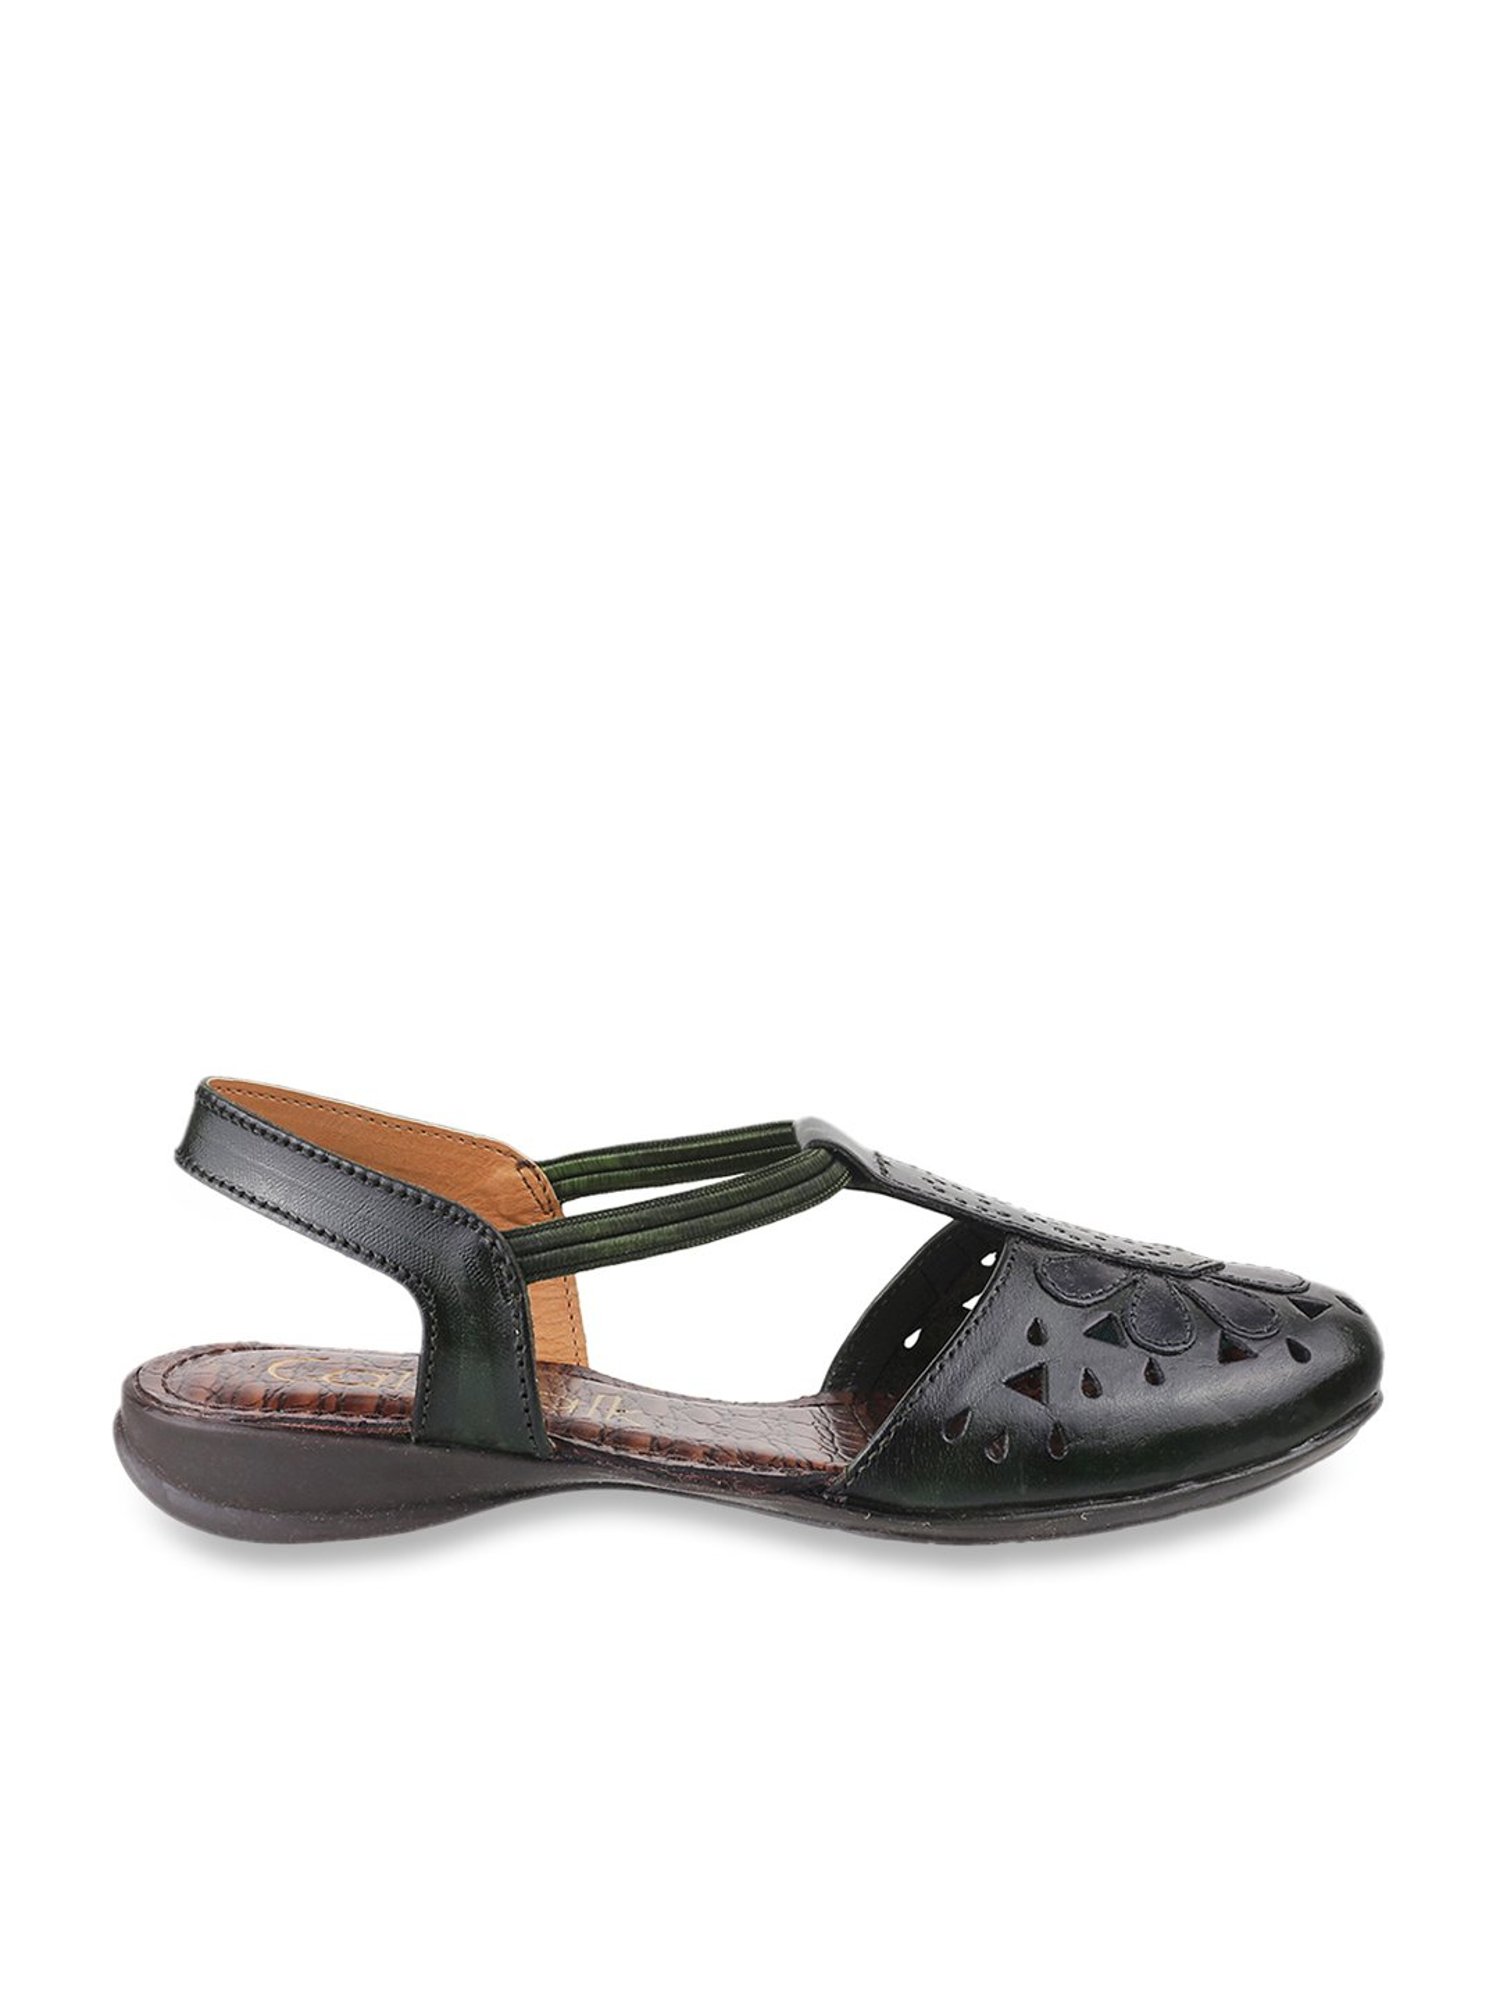 Ladies Shoes Closed Toe Sandals Summer Non-Slip Hollow Comfort Flats  Walking New | eBay